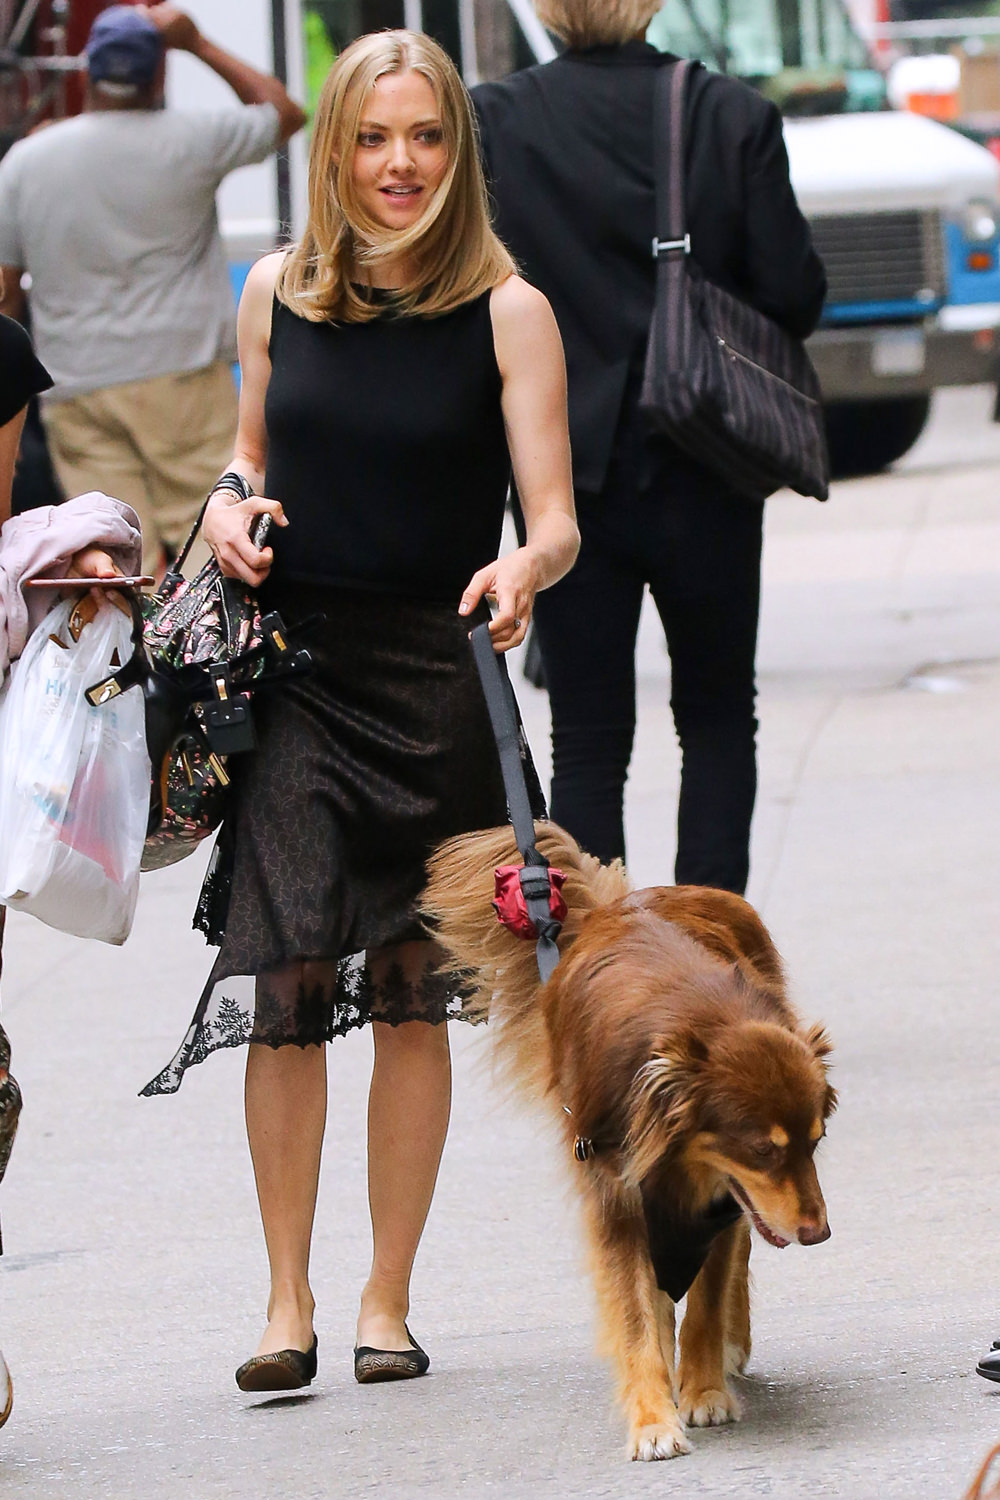 Amanda-Seyfried-GOTSNYC-Street-Style-Givenchy-Tom-Lorenzo-Site (1)